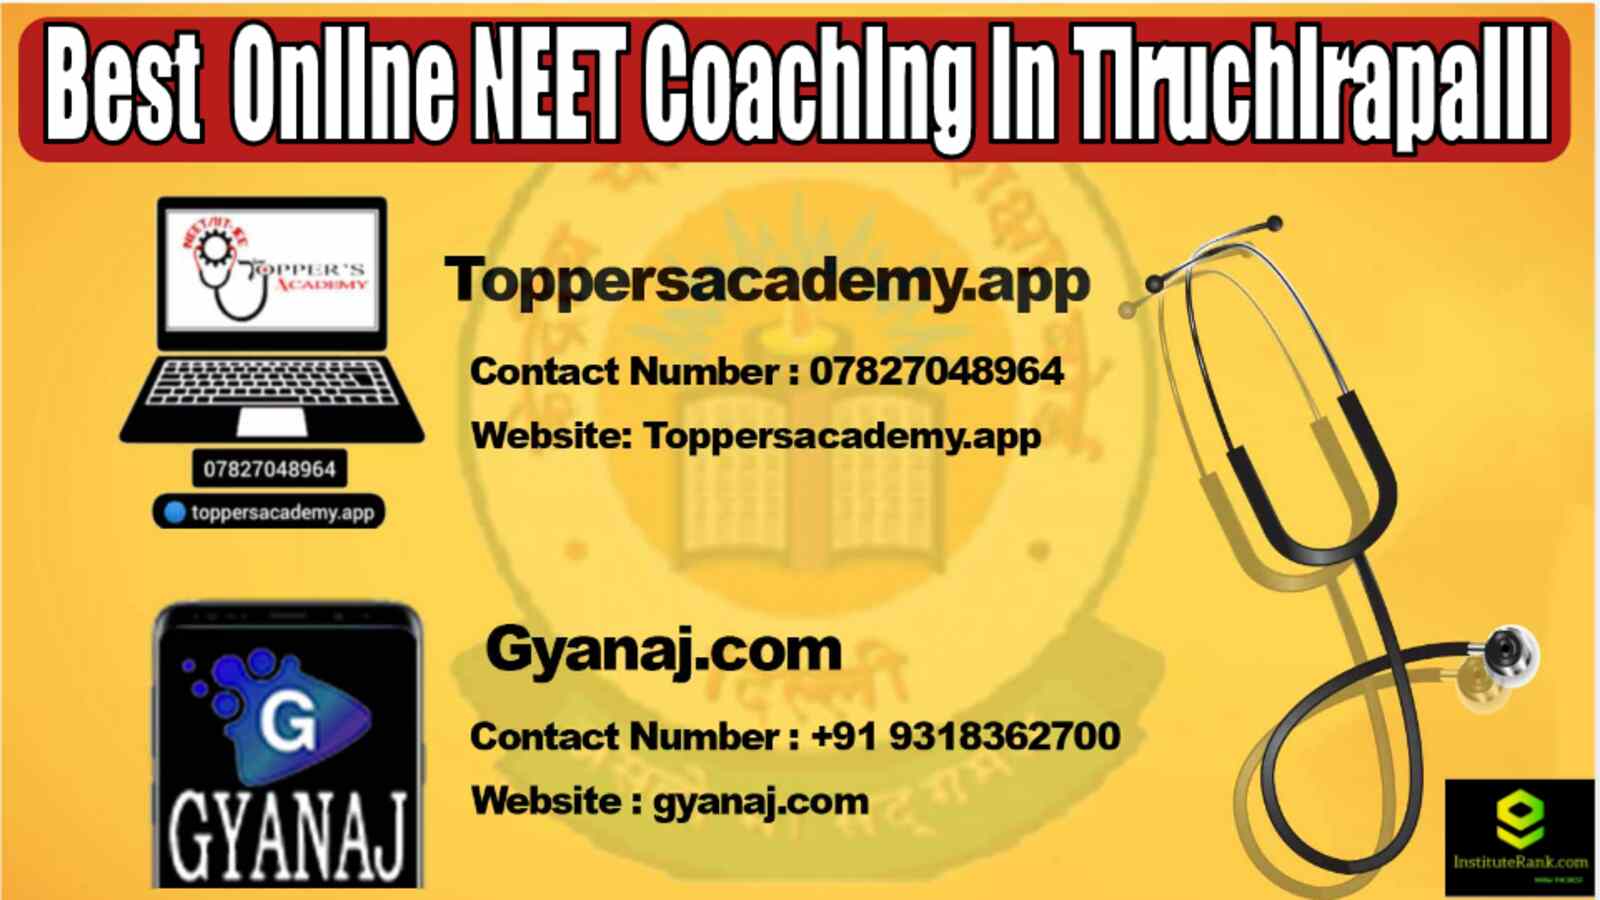 Best Online NEET Coaching In Tiruchirapaill